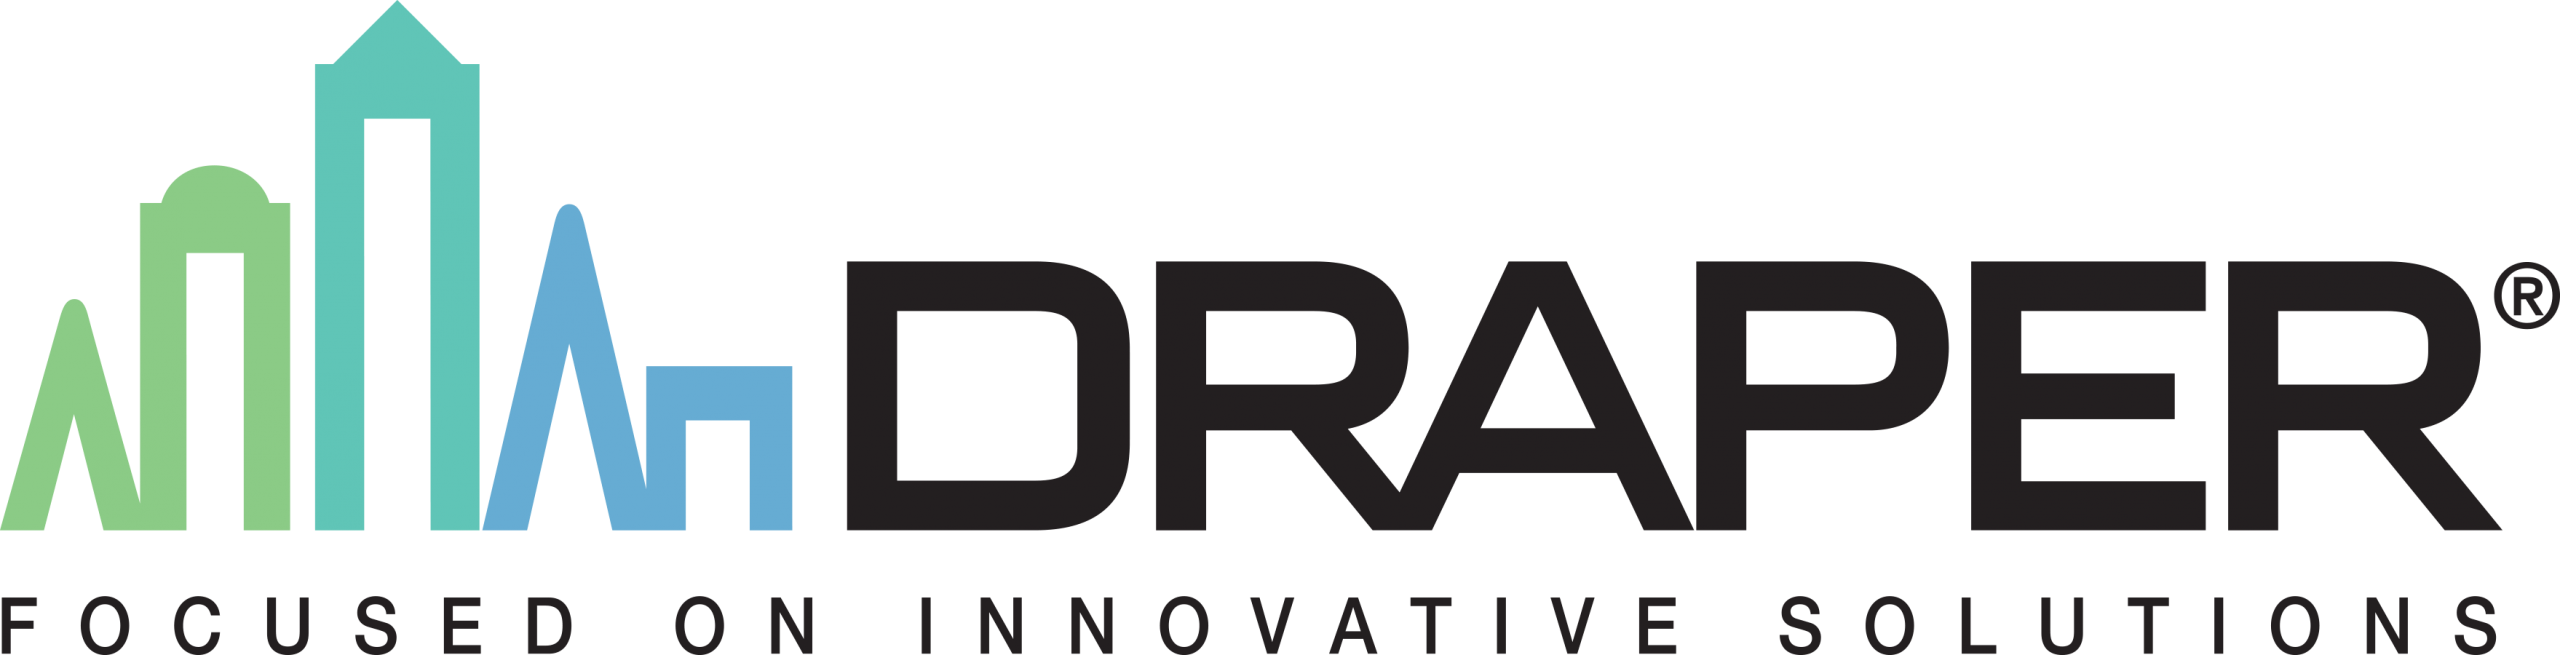 draper-2017-logo-tag-horiz-pos-rgb-scaled-2